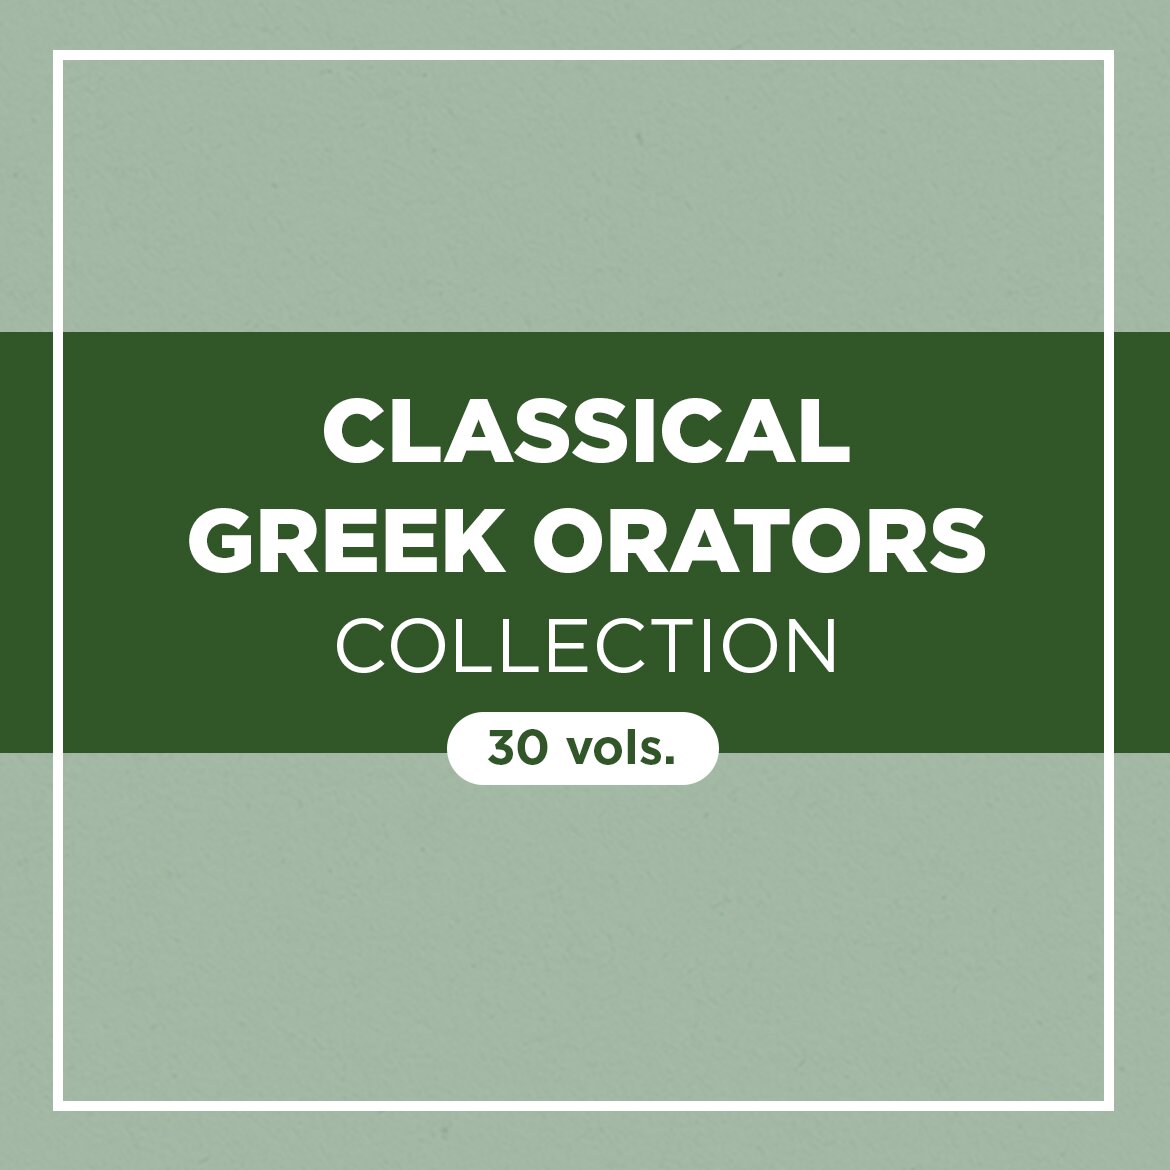 Classical Greek Orators Collection (30 vols.)